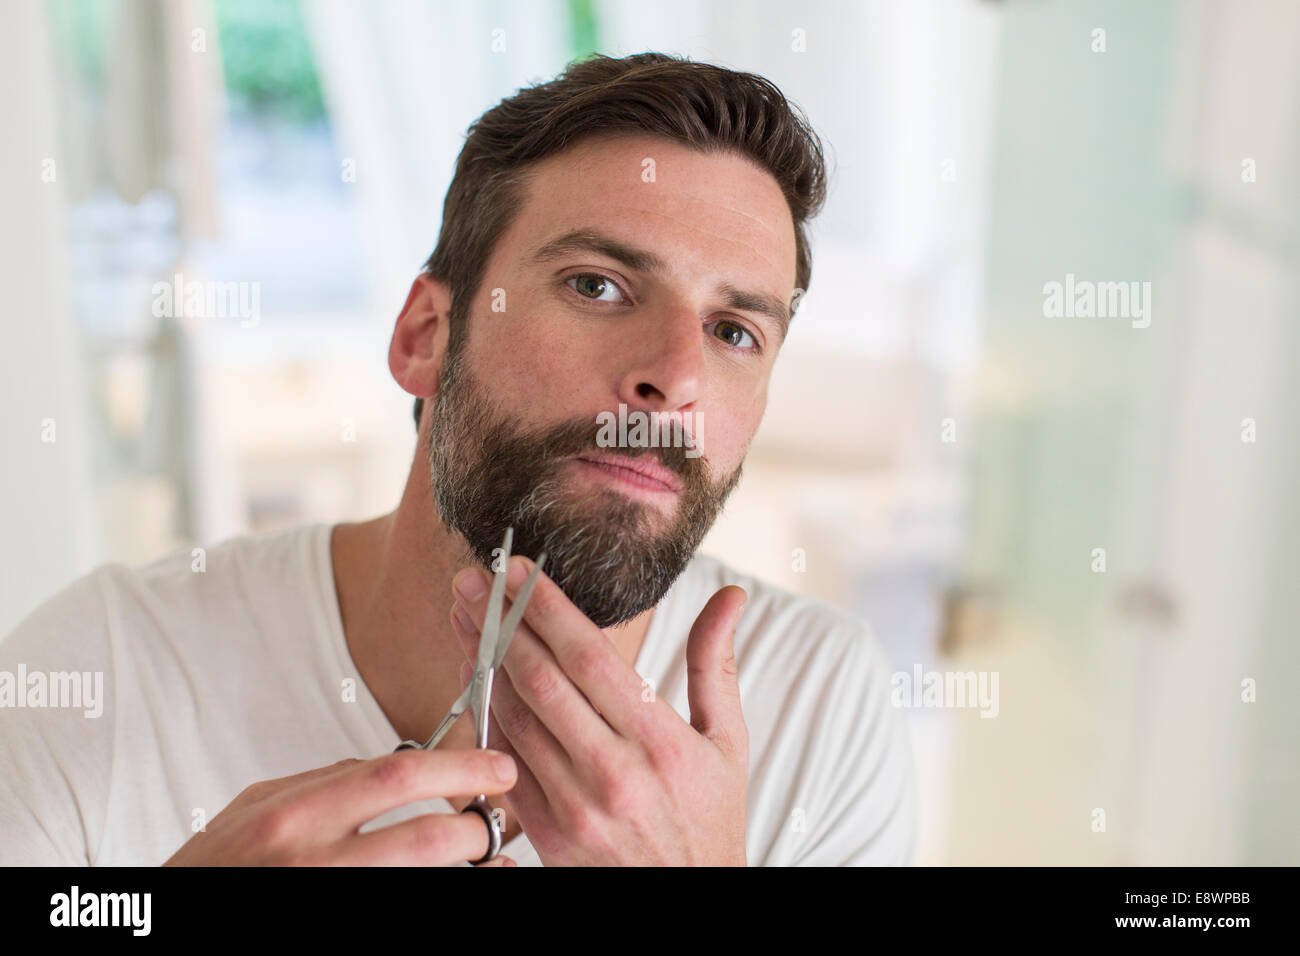 Man trimming beard in bathroom Stock Photo